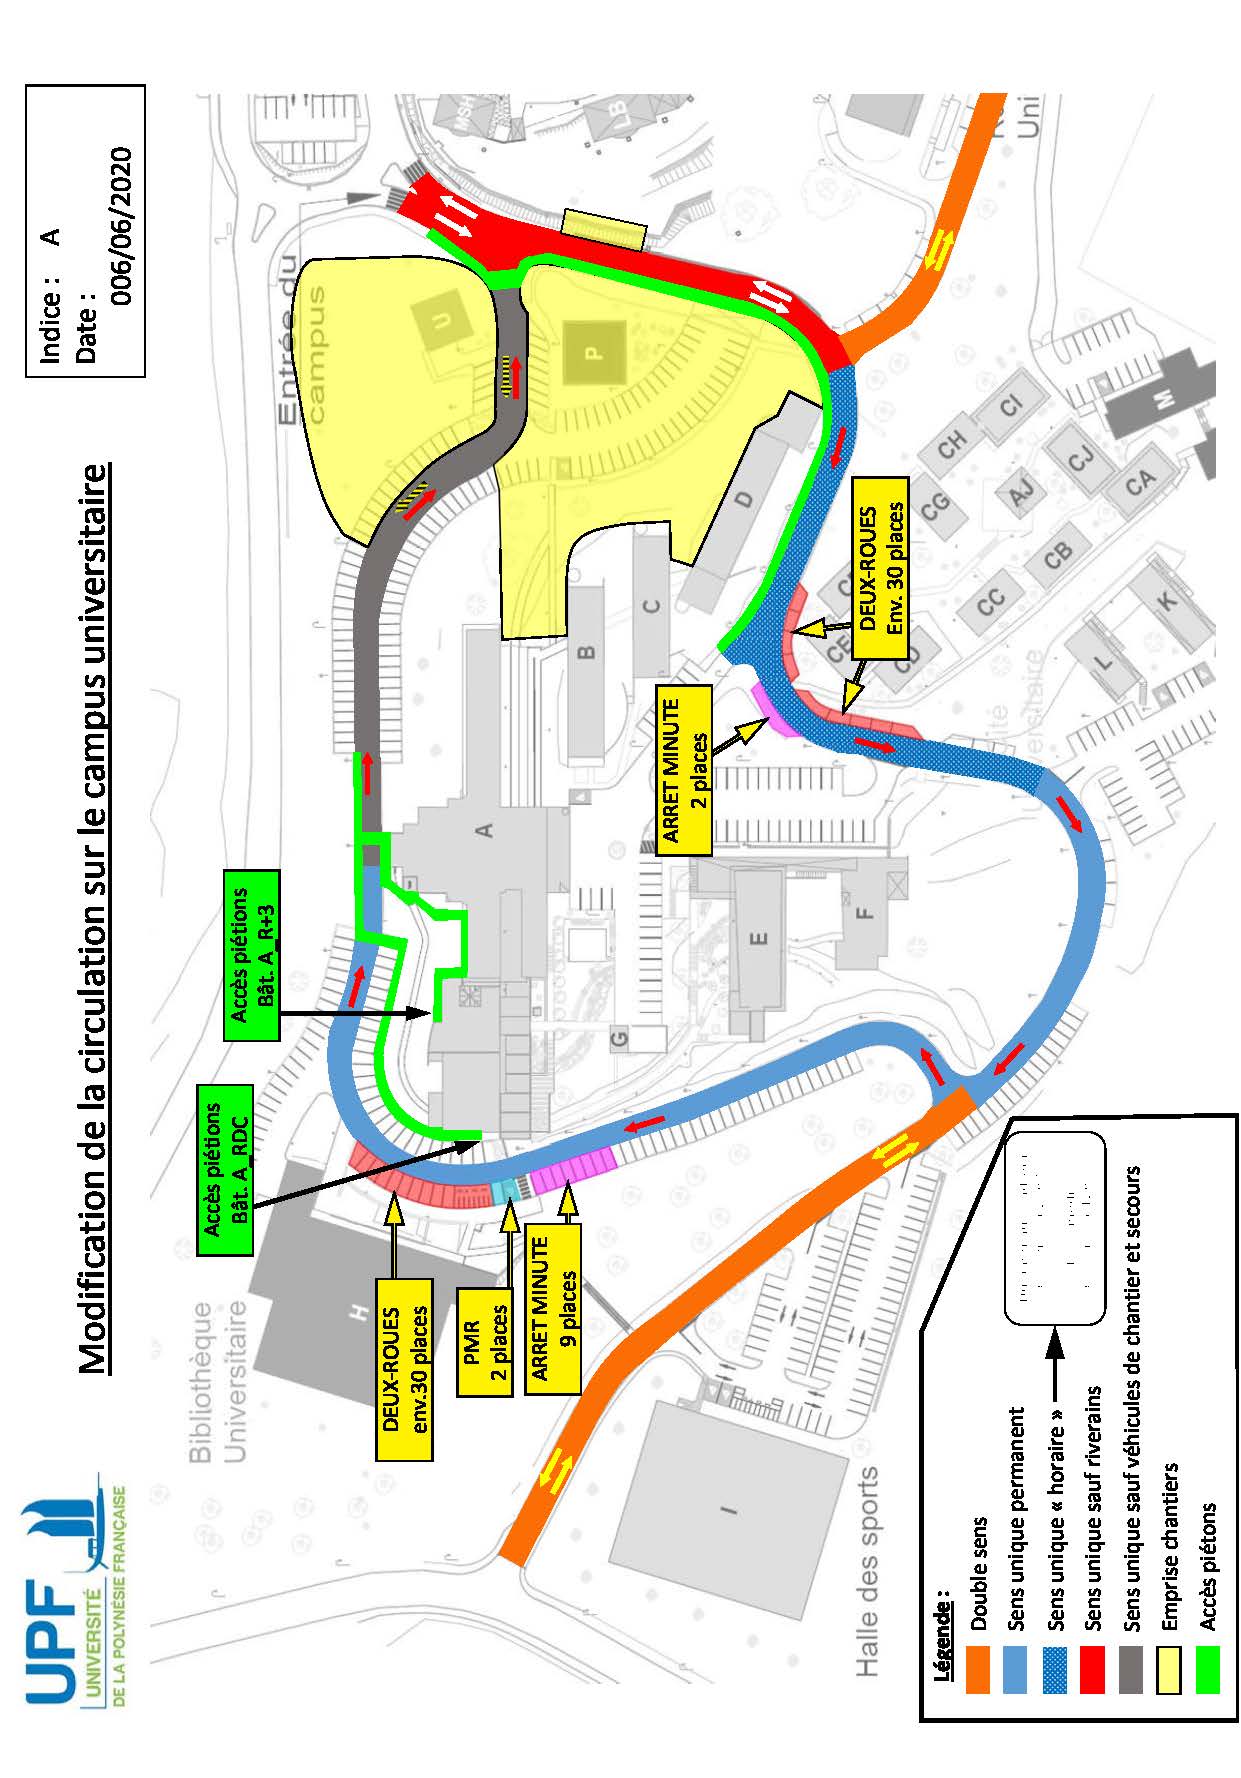 Plan circulation campus travaux